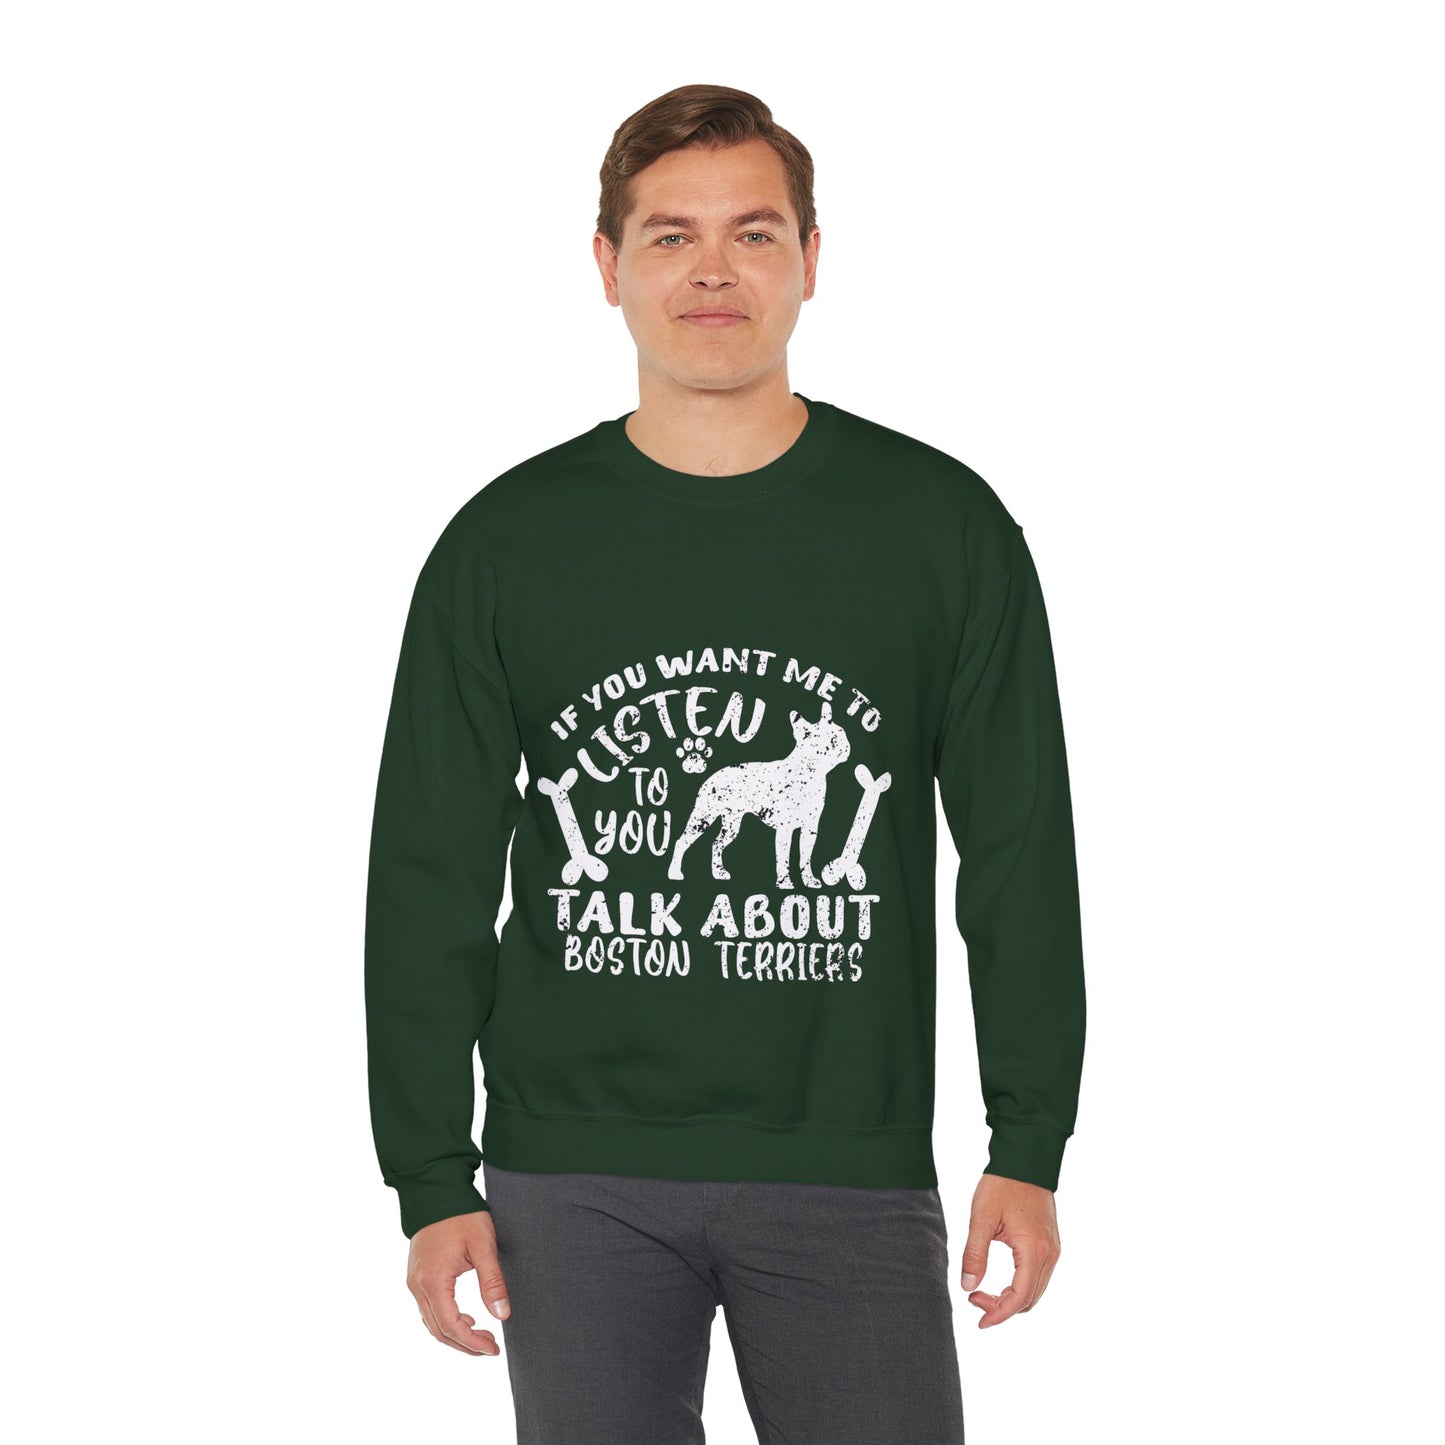 Alfie  - Unisex Sweatshirt for Boston Terrier lovers